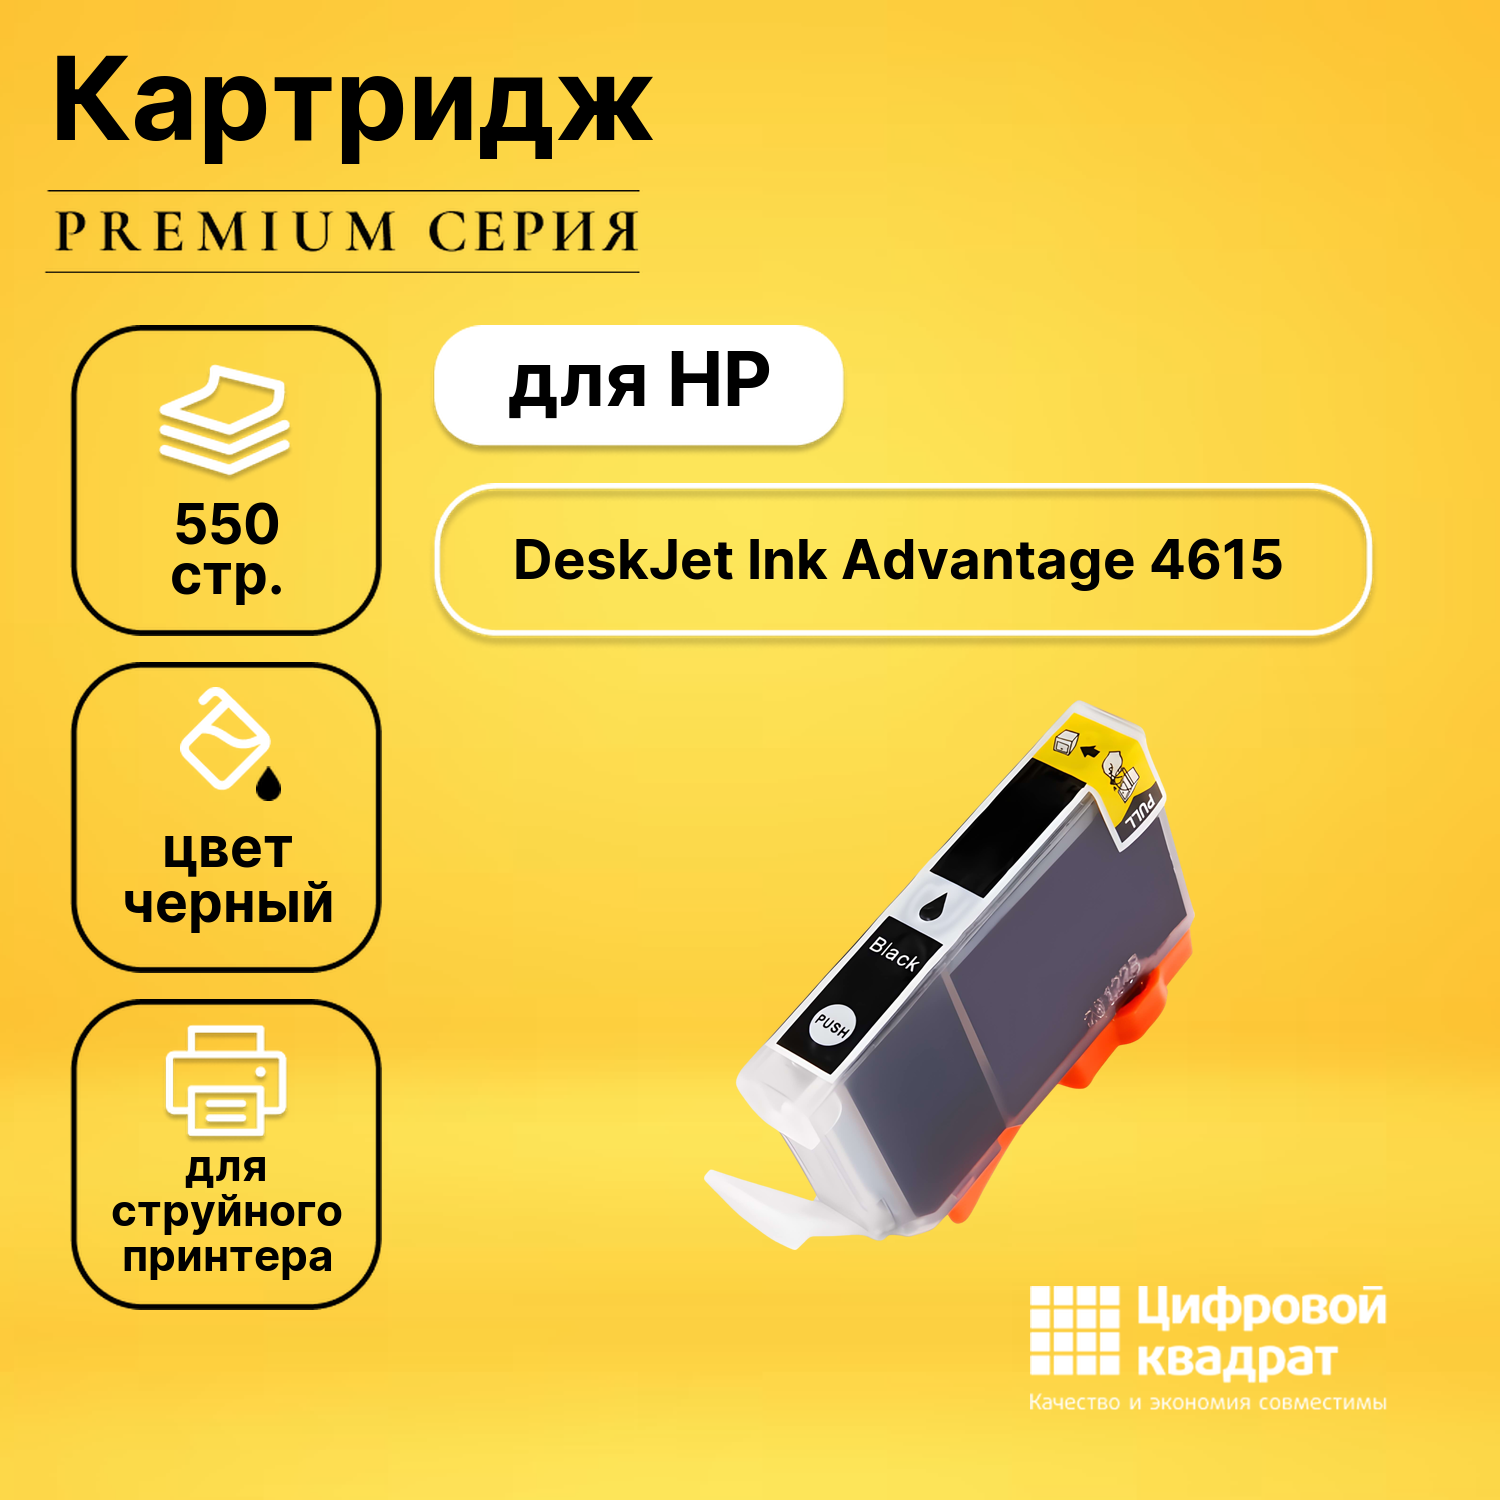 Картридж DS для HP DeskJet Ink Advantage 4615 совместимый